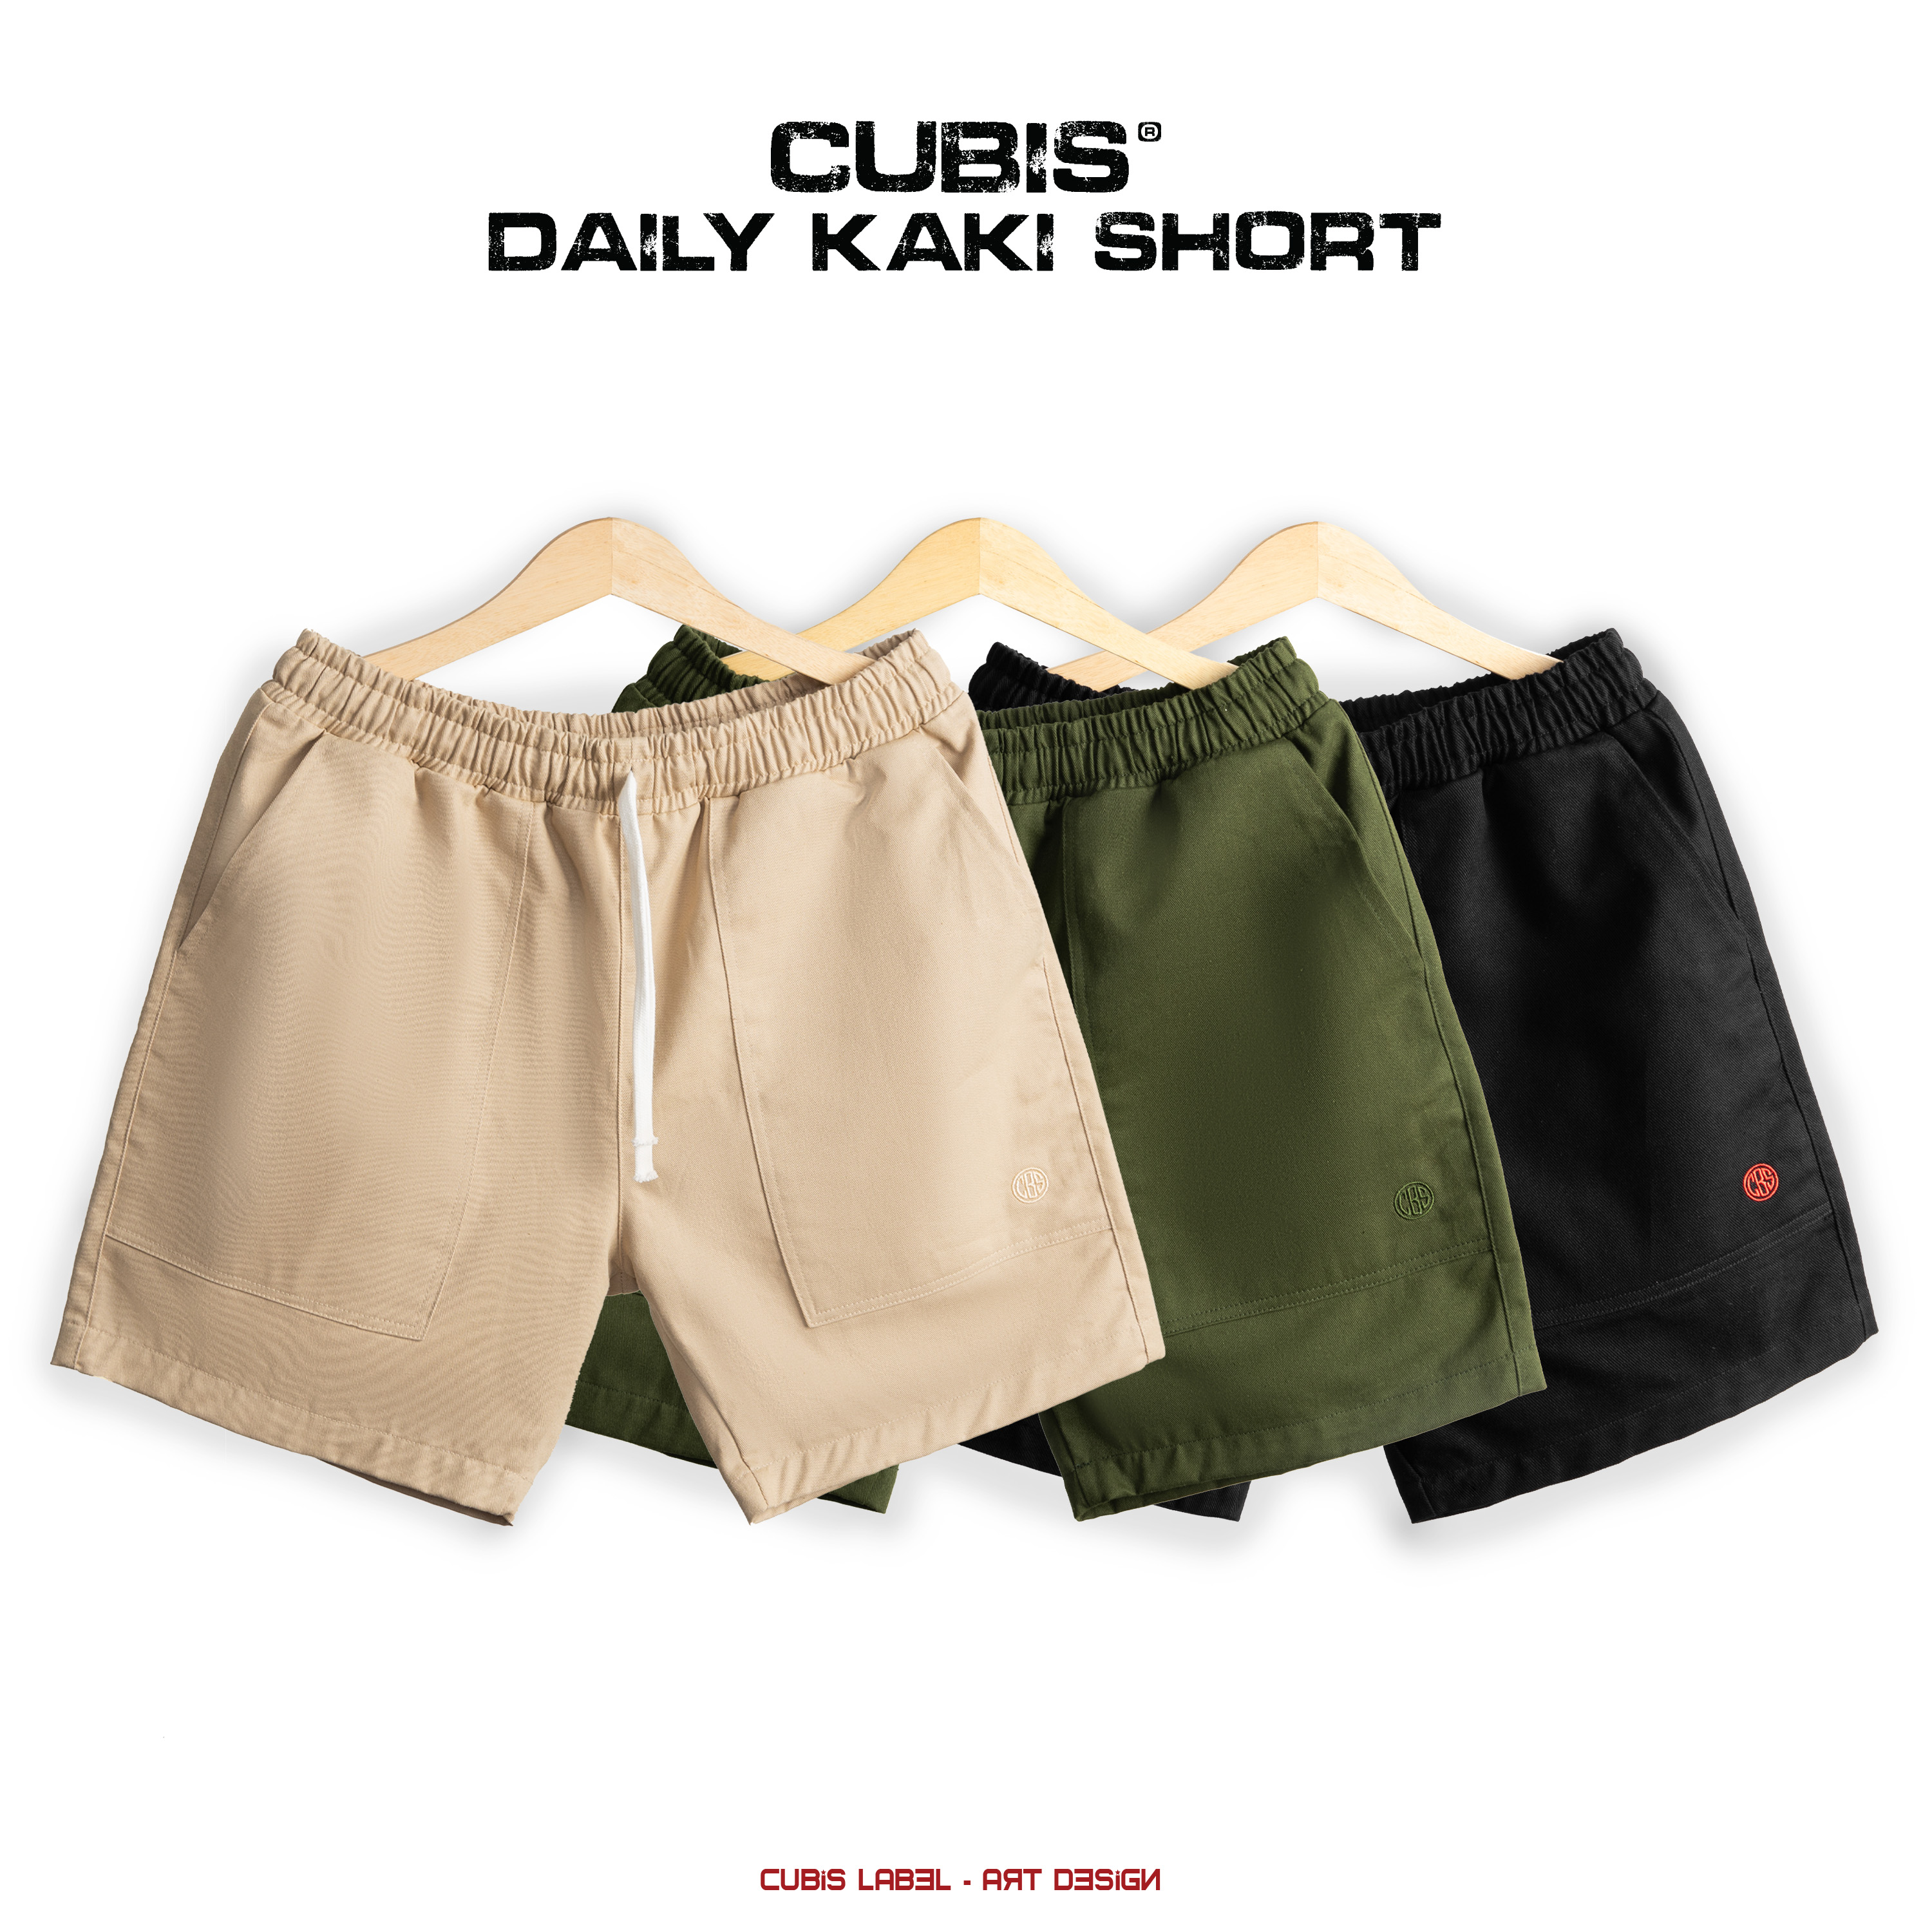 Quần Short Nam Vải Kaki- Daily Kaki Short CUBIS LABEL